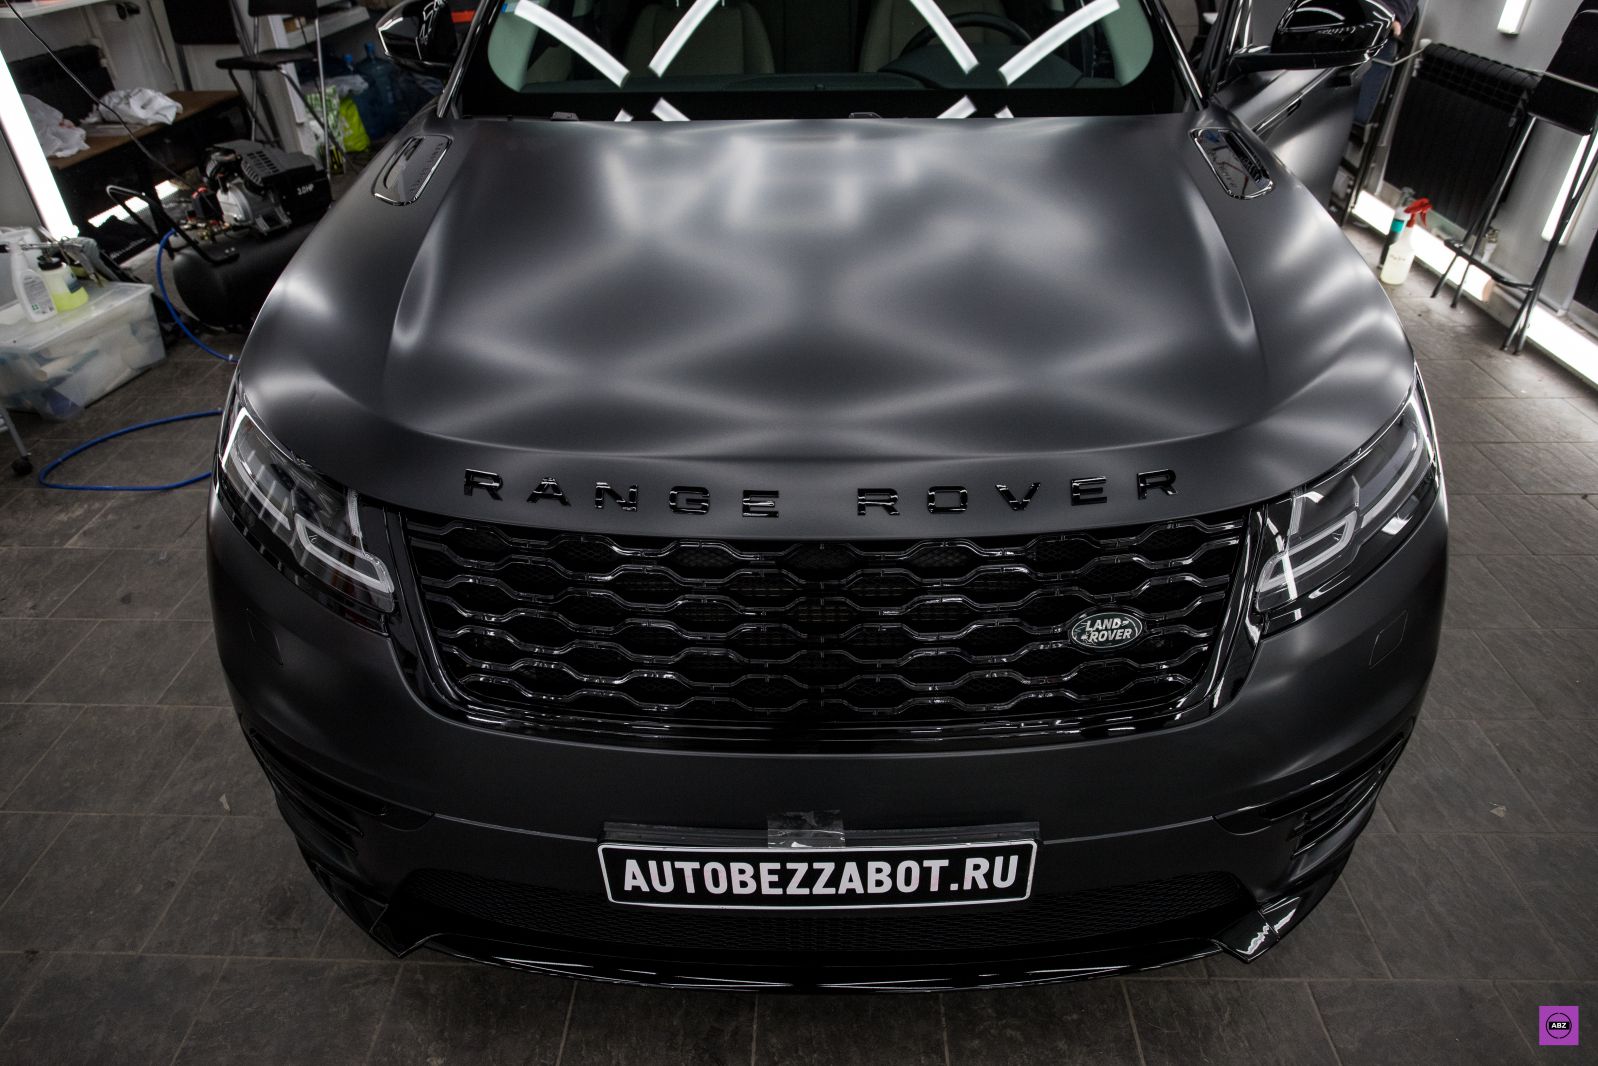 Фото Range Rover Velar из металлика в мат